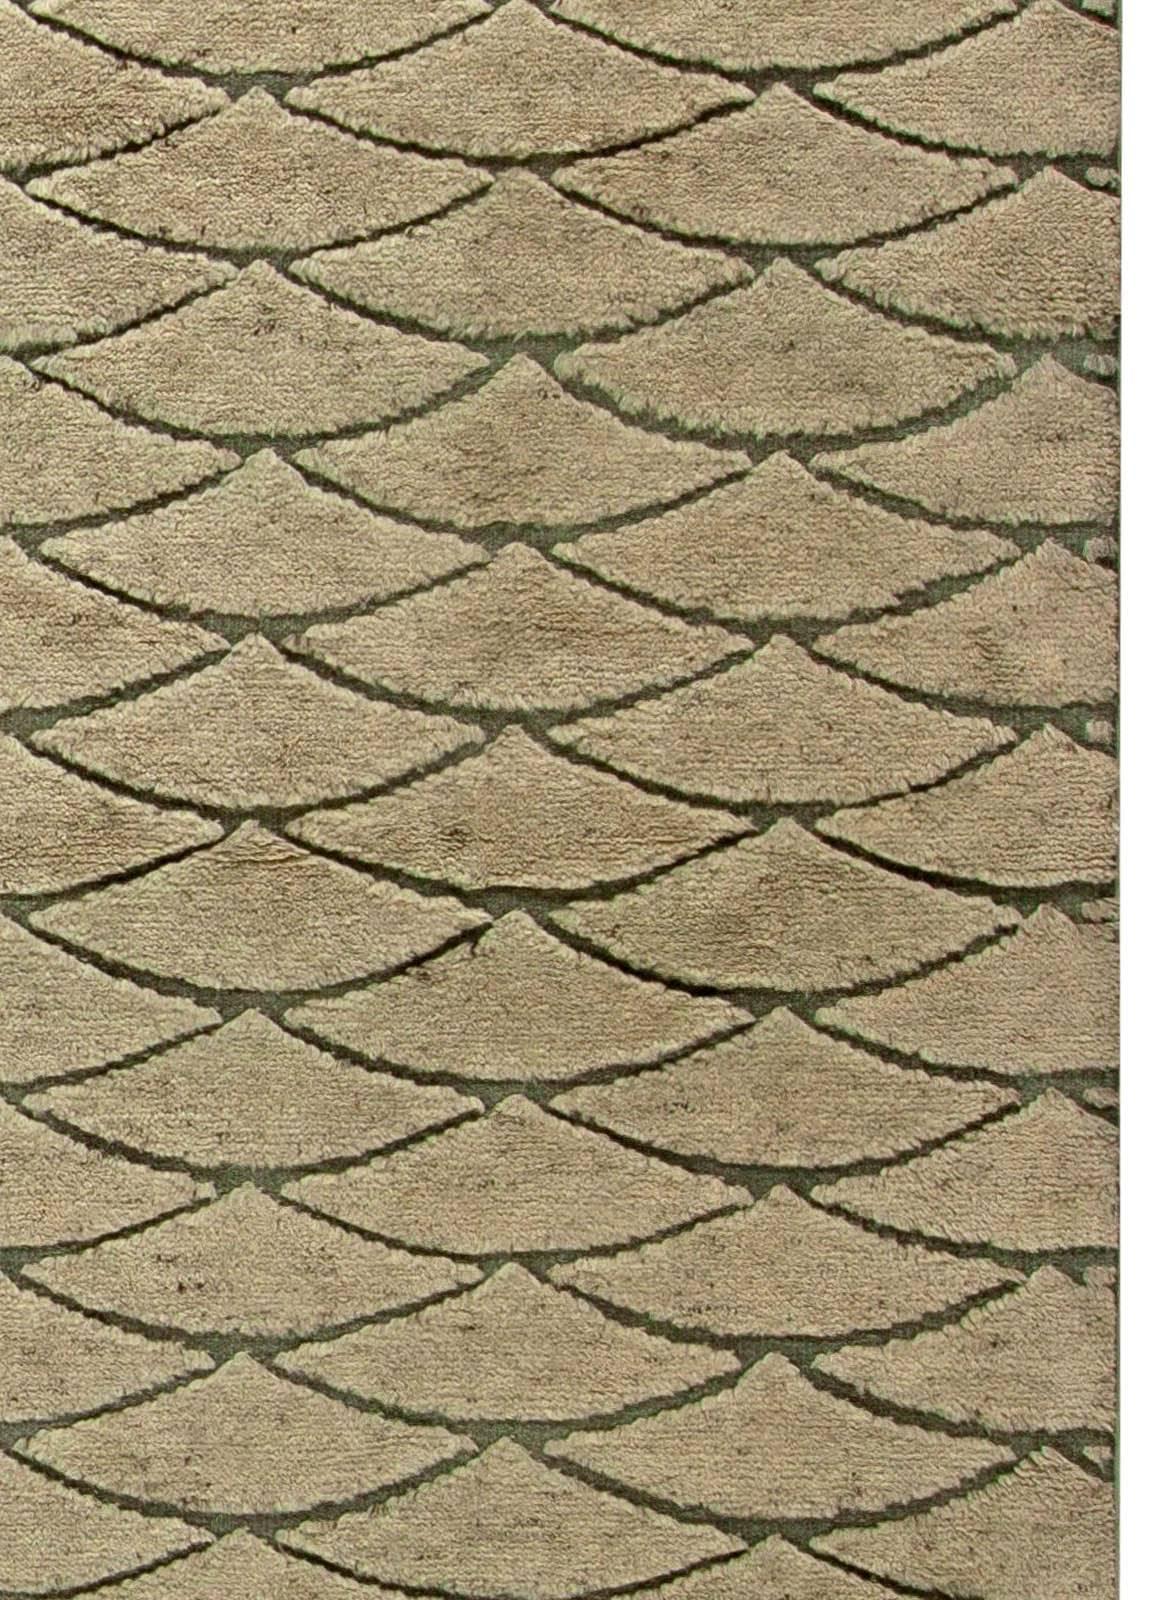 Hand-Knotted Modern Moroccan Geometric Beige and Brown Handmade Wool Rug by Doris Leslie Blau For Sale